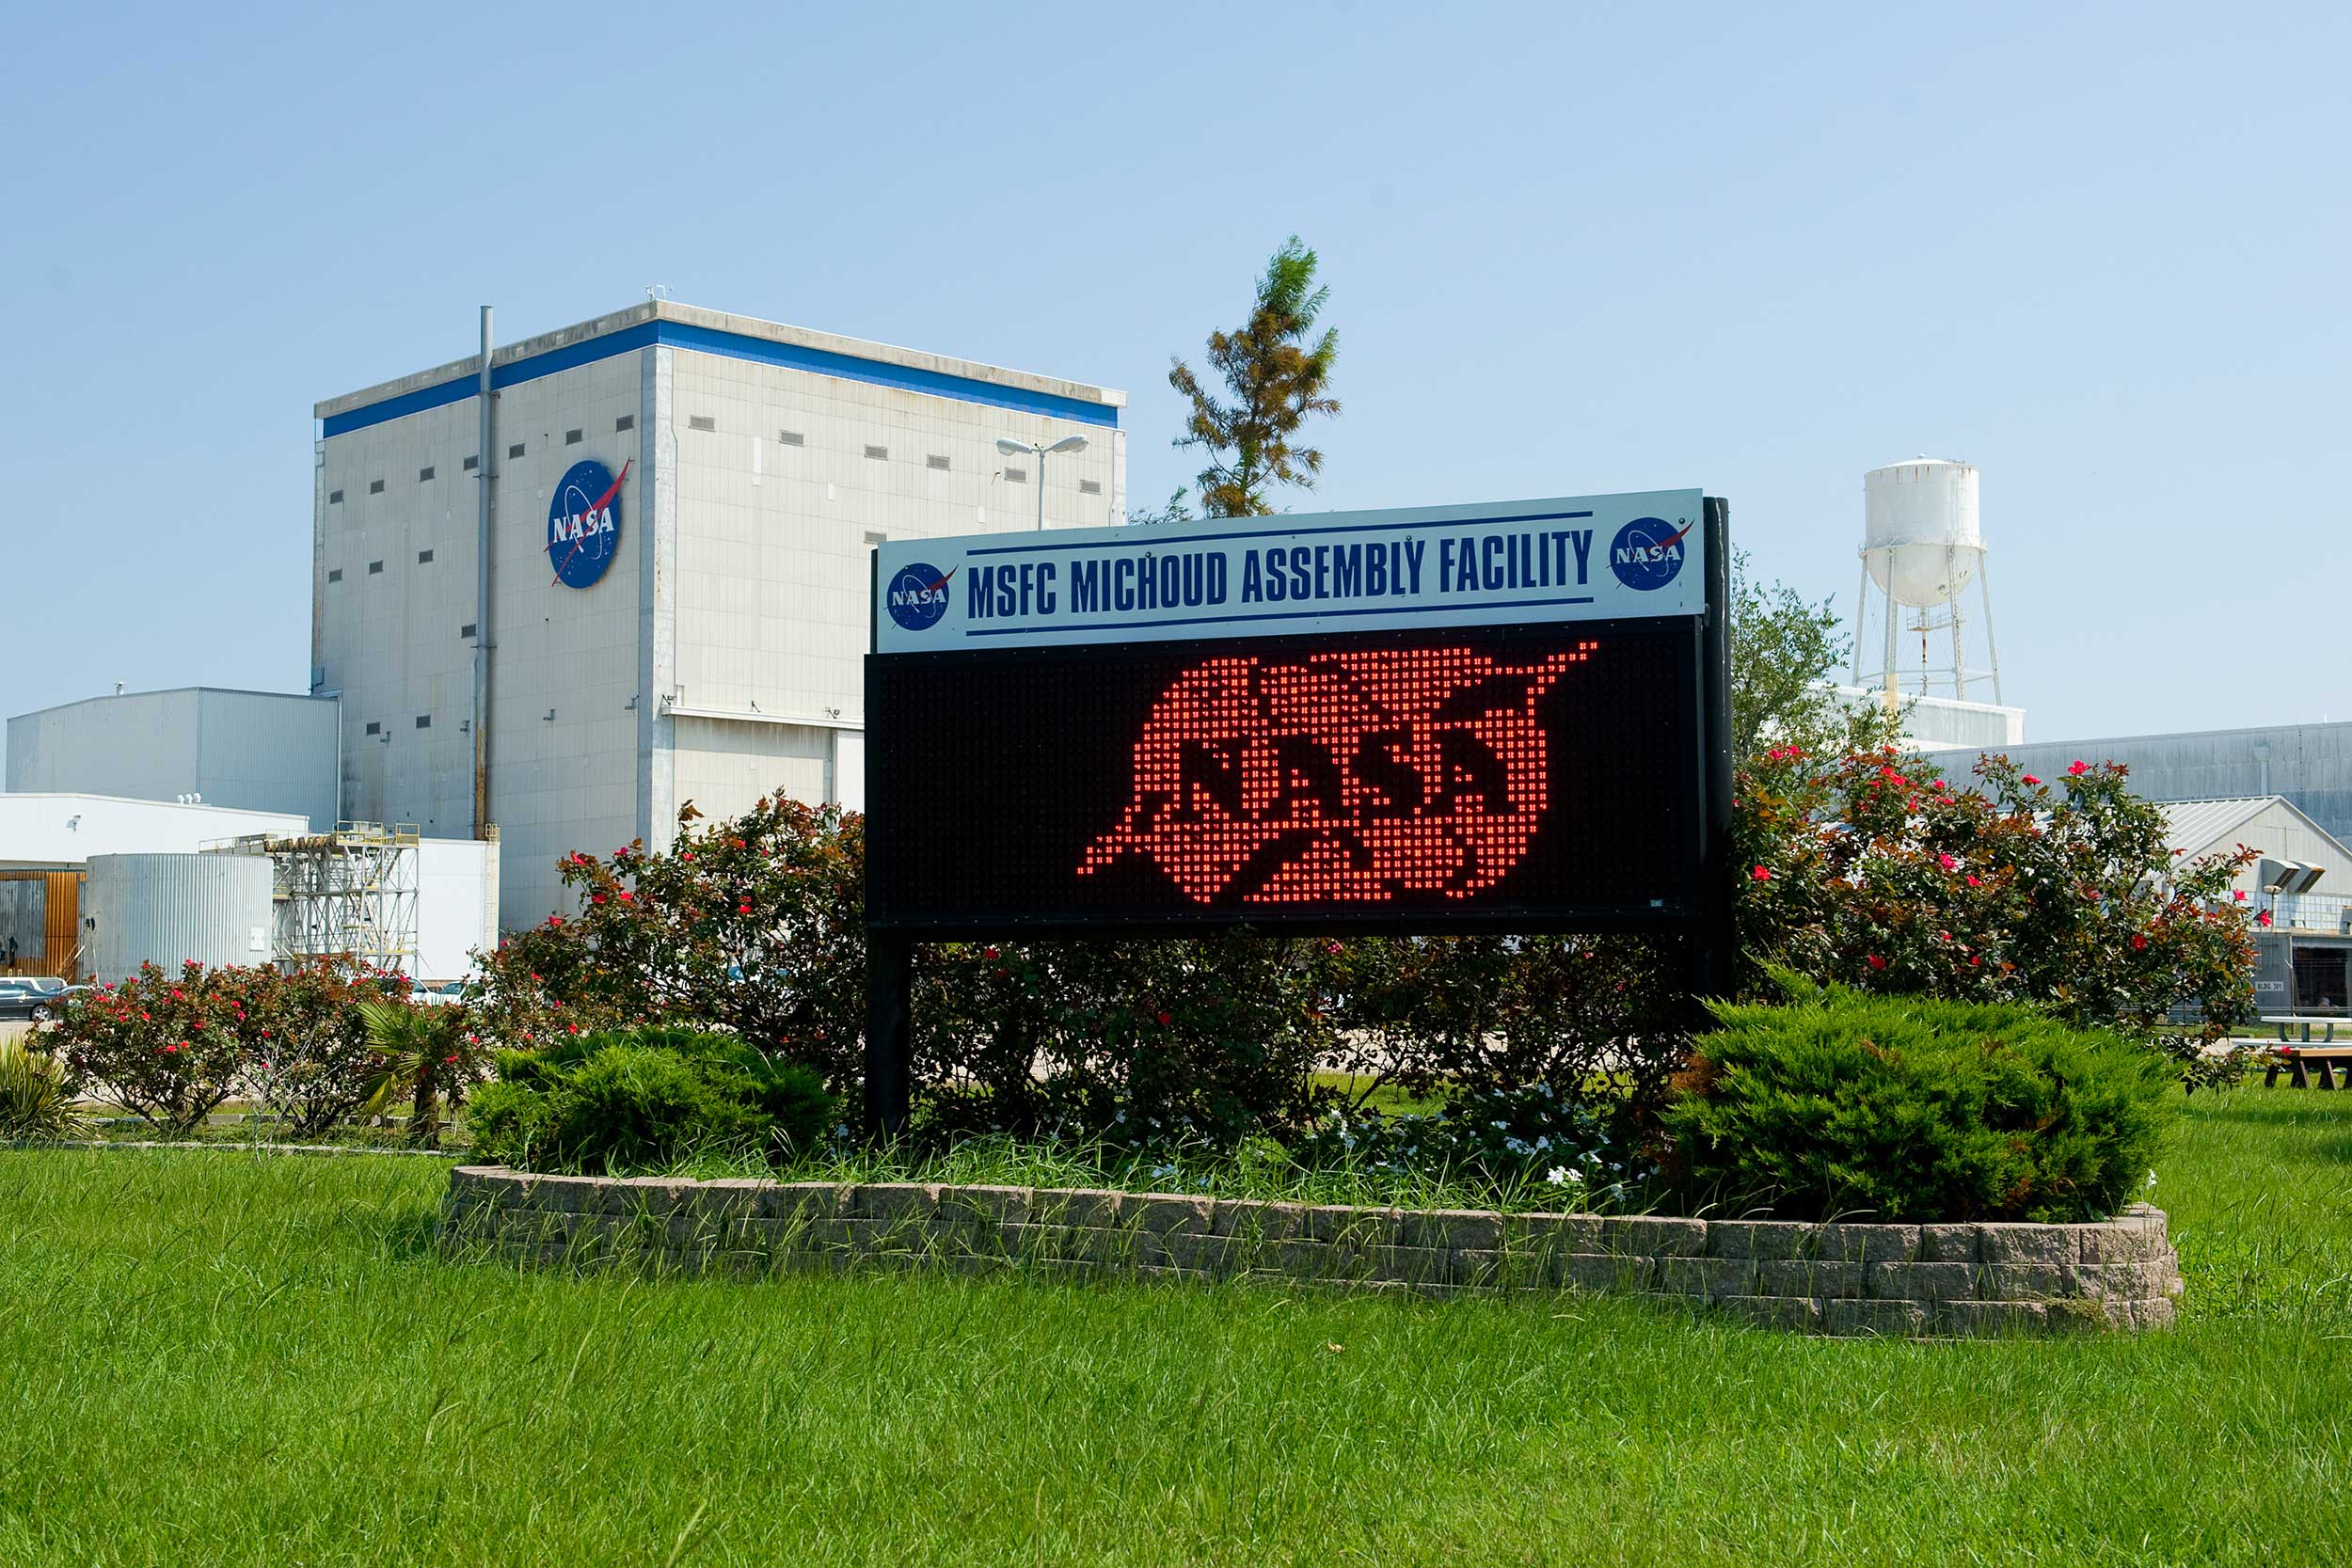 The entrance to the MSFC Michoud Assembly Facility NASA center